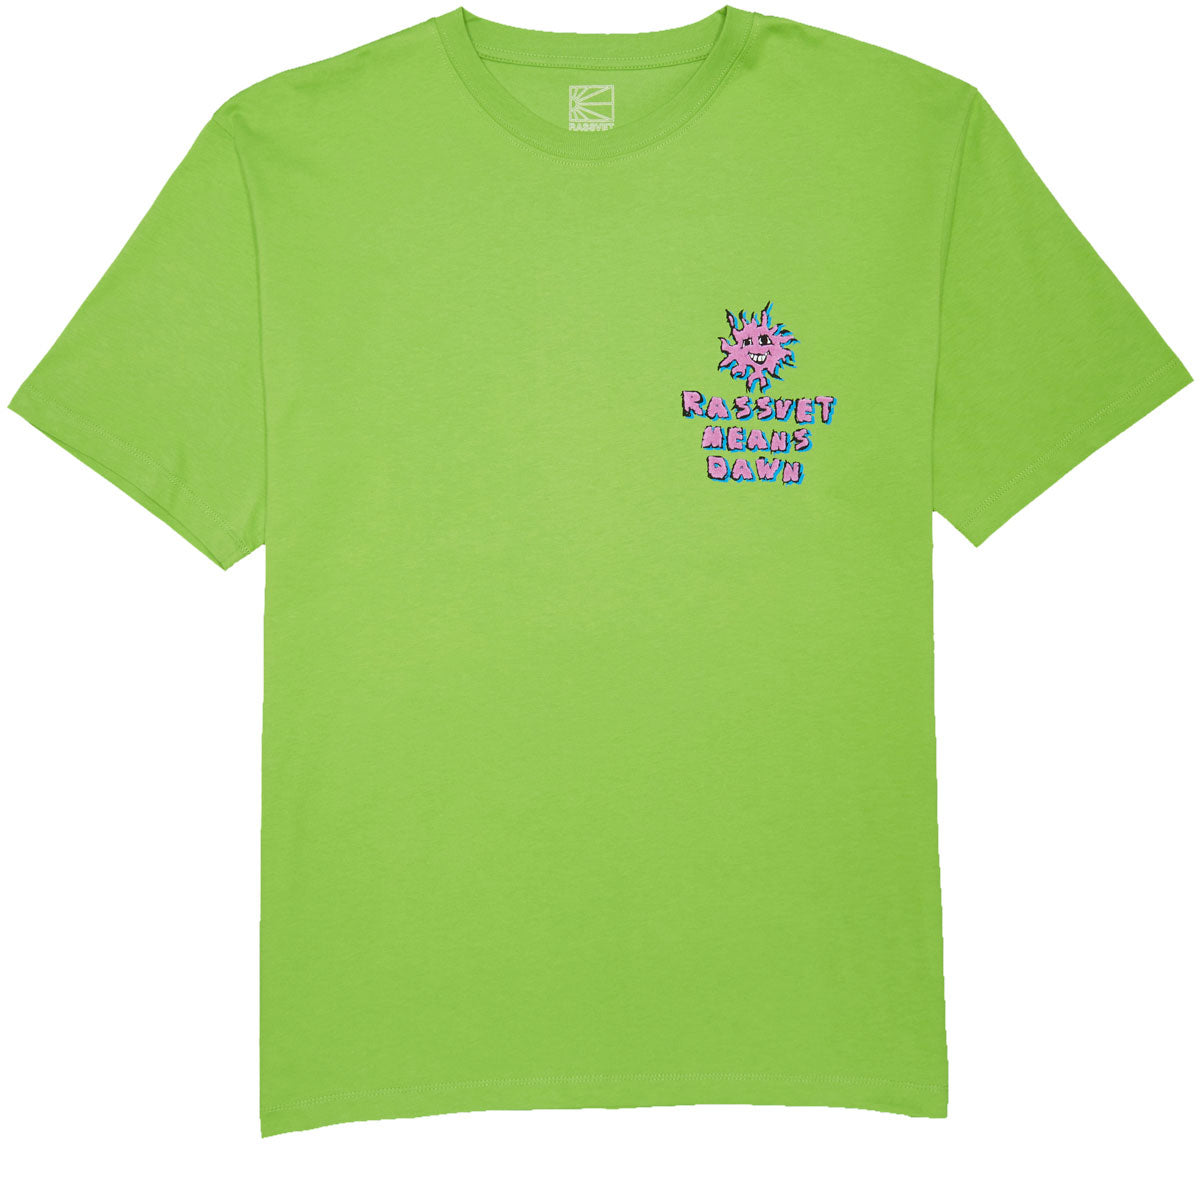 Rassvet R.M.D T-Shirt - Lime image 1